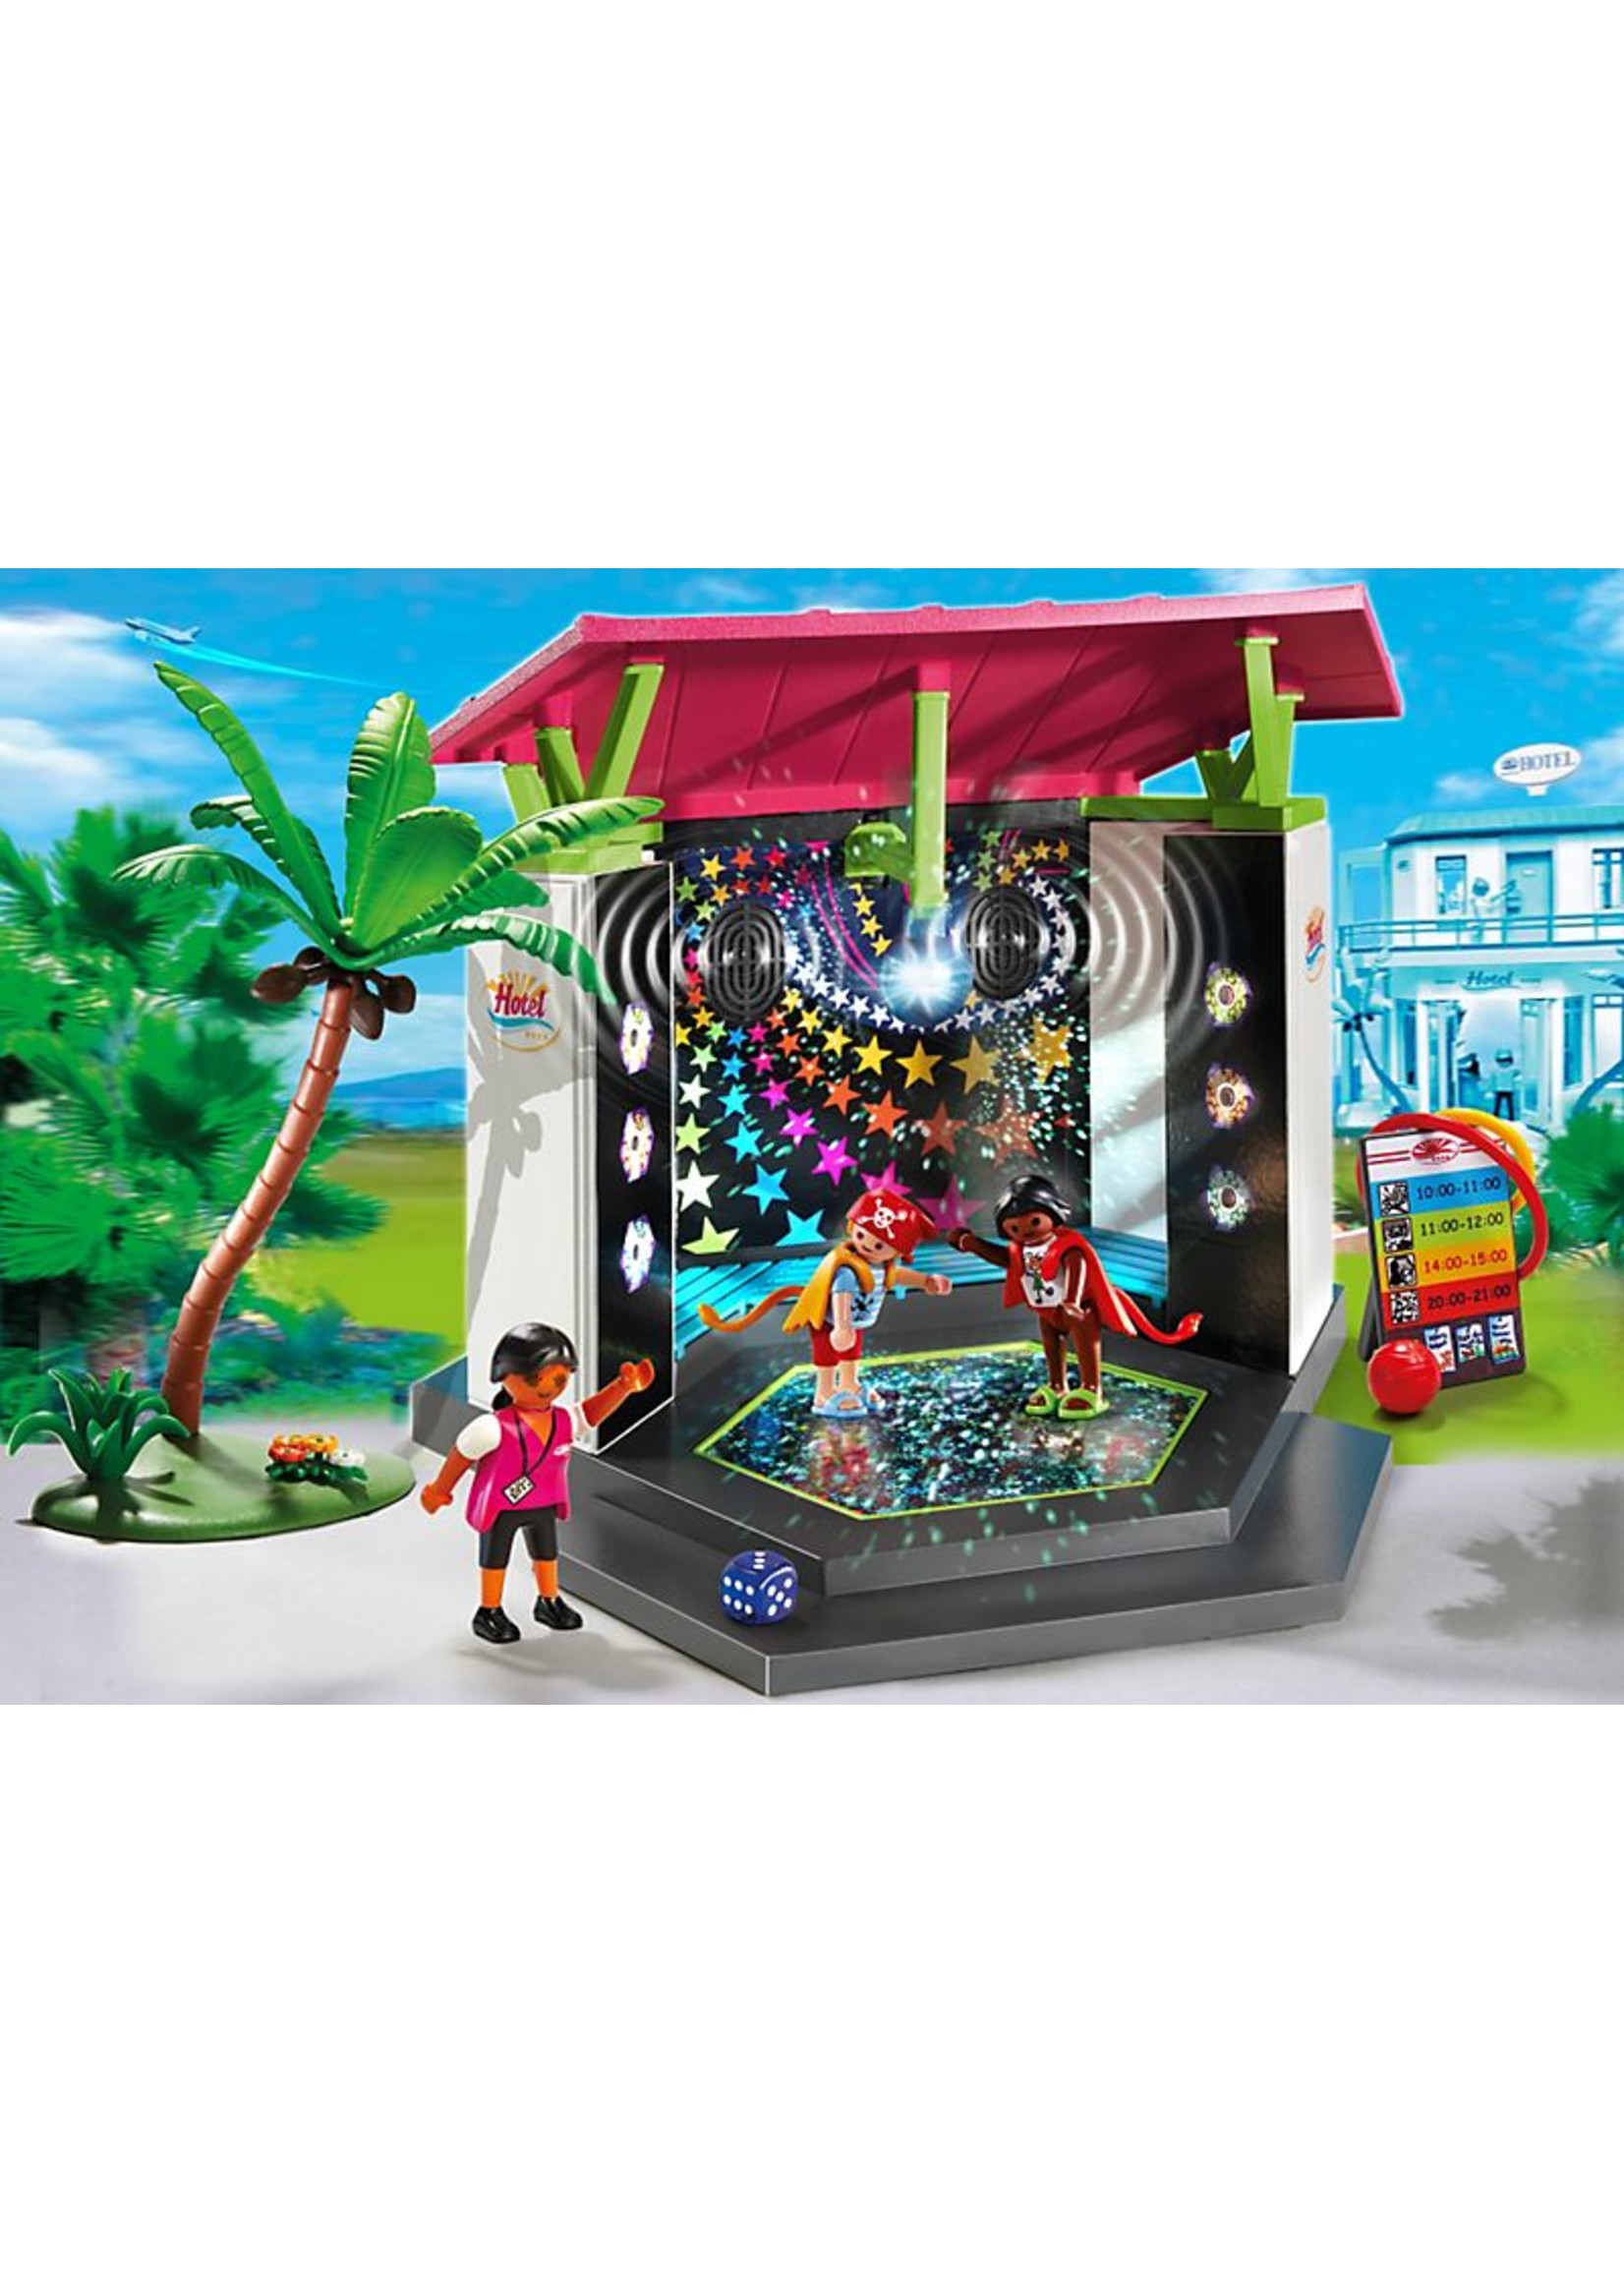 Playmobil Children's Club with Disco